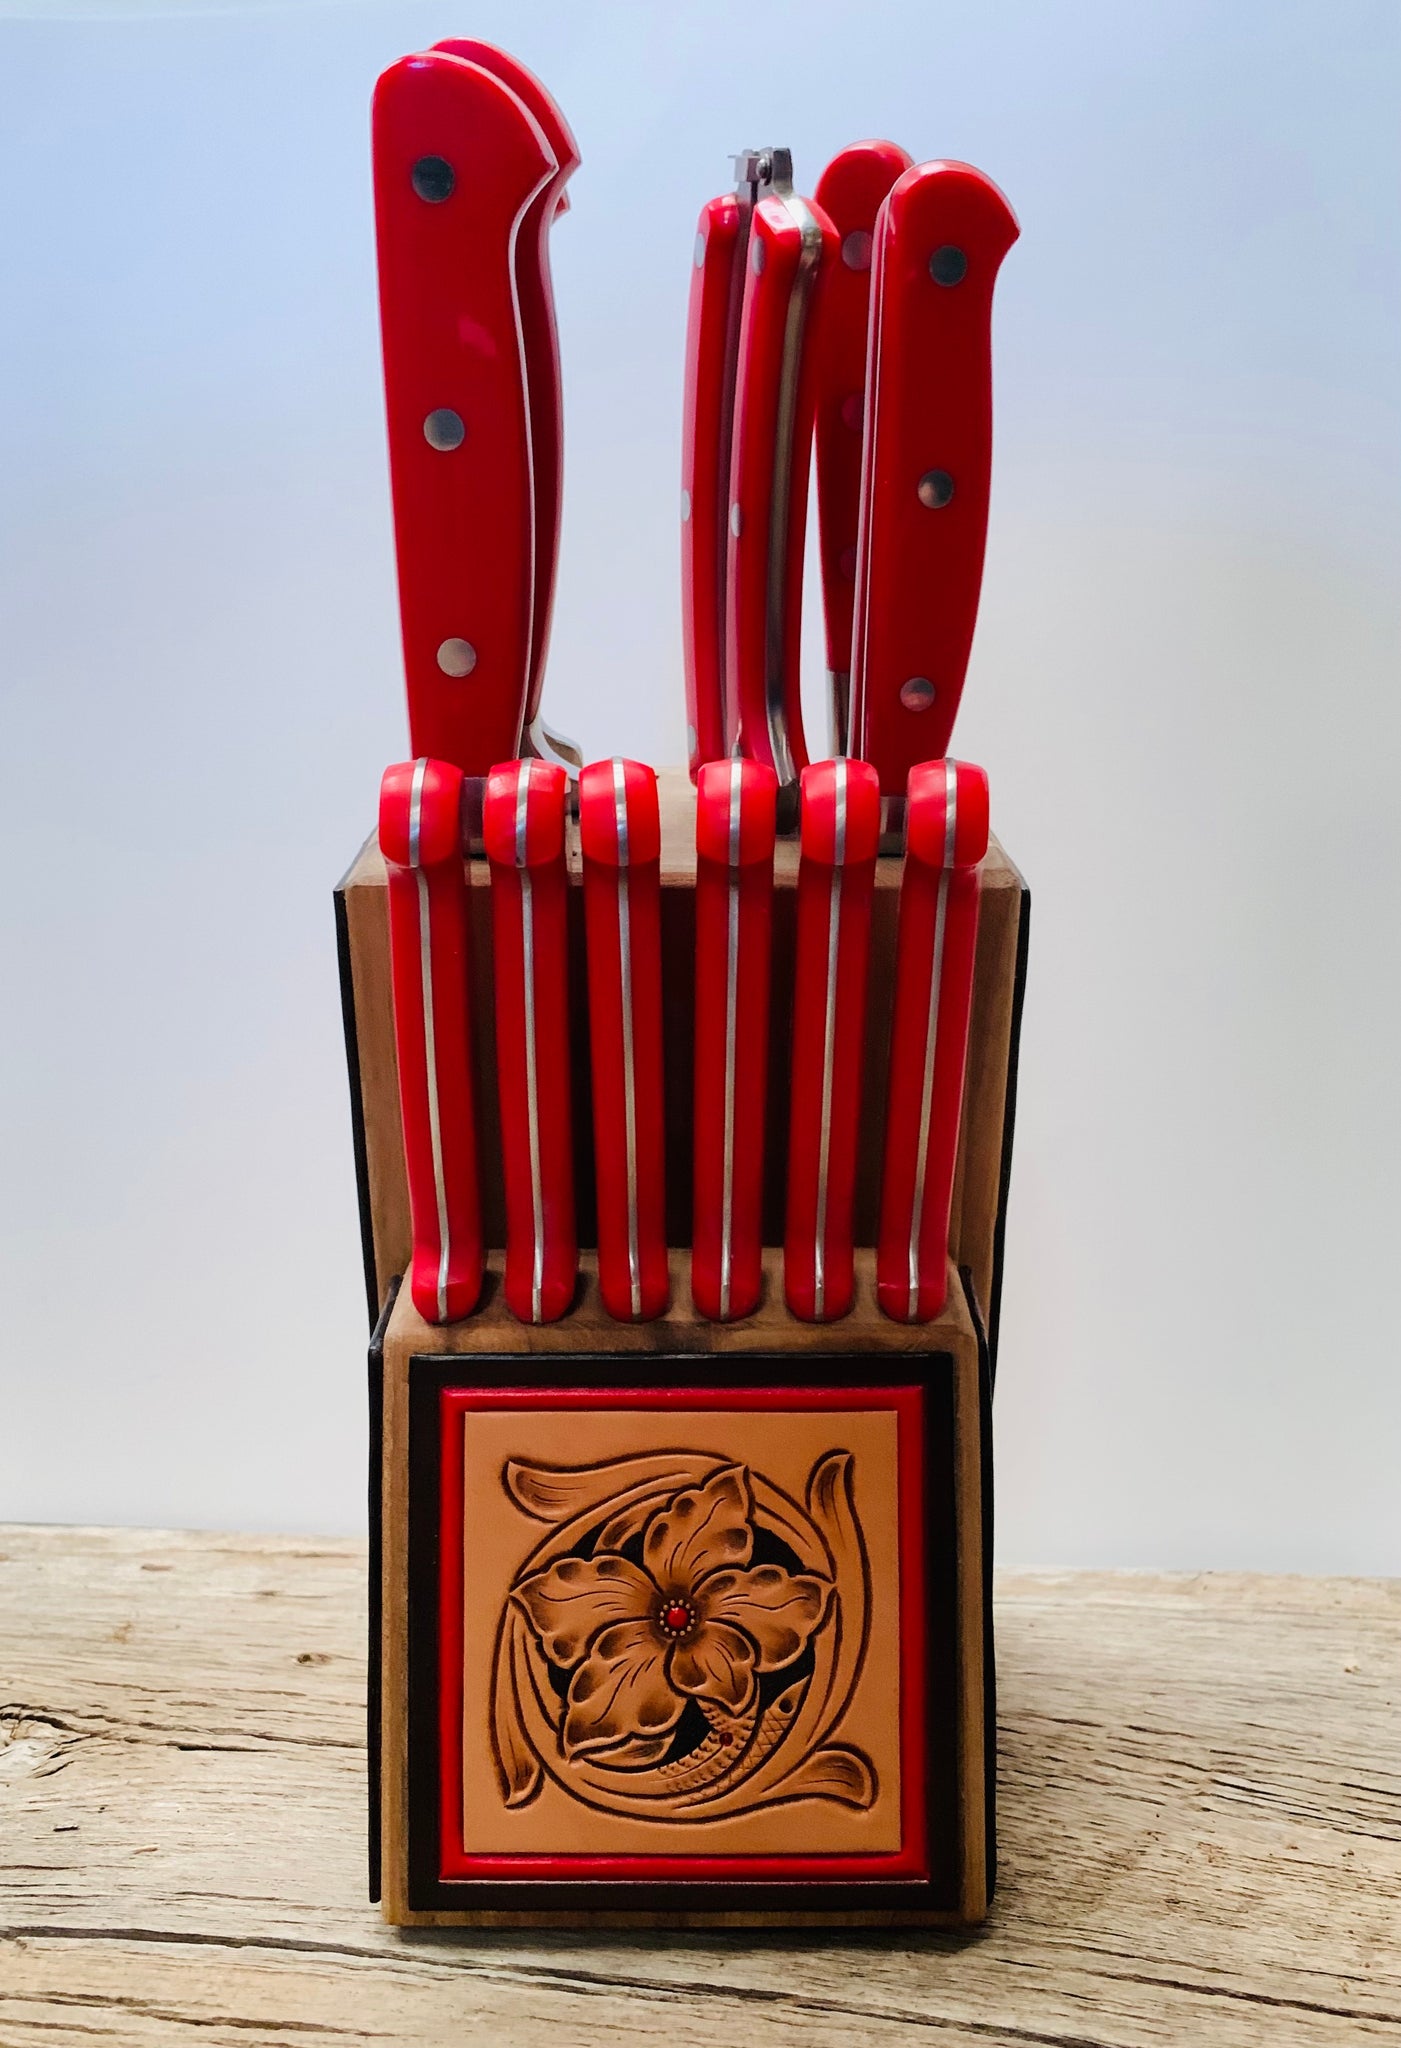 Pioneer 14-Piece Stainless Steel Knife Block Set, Red Kitchen